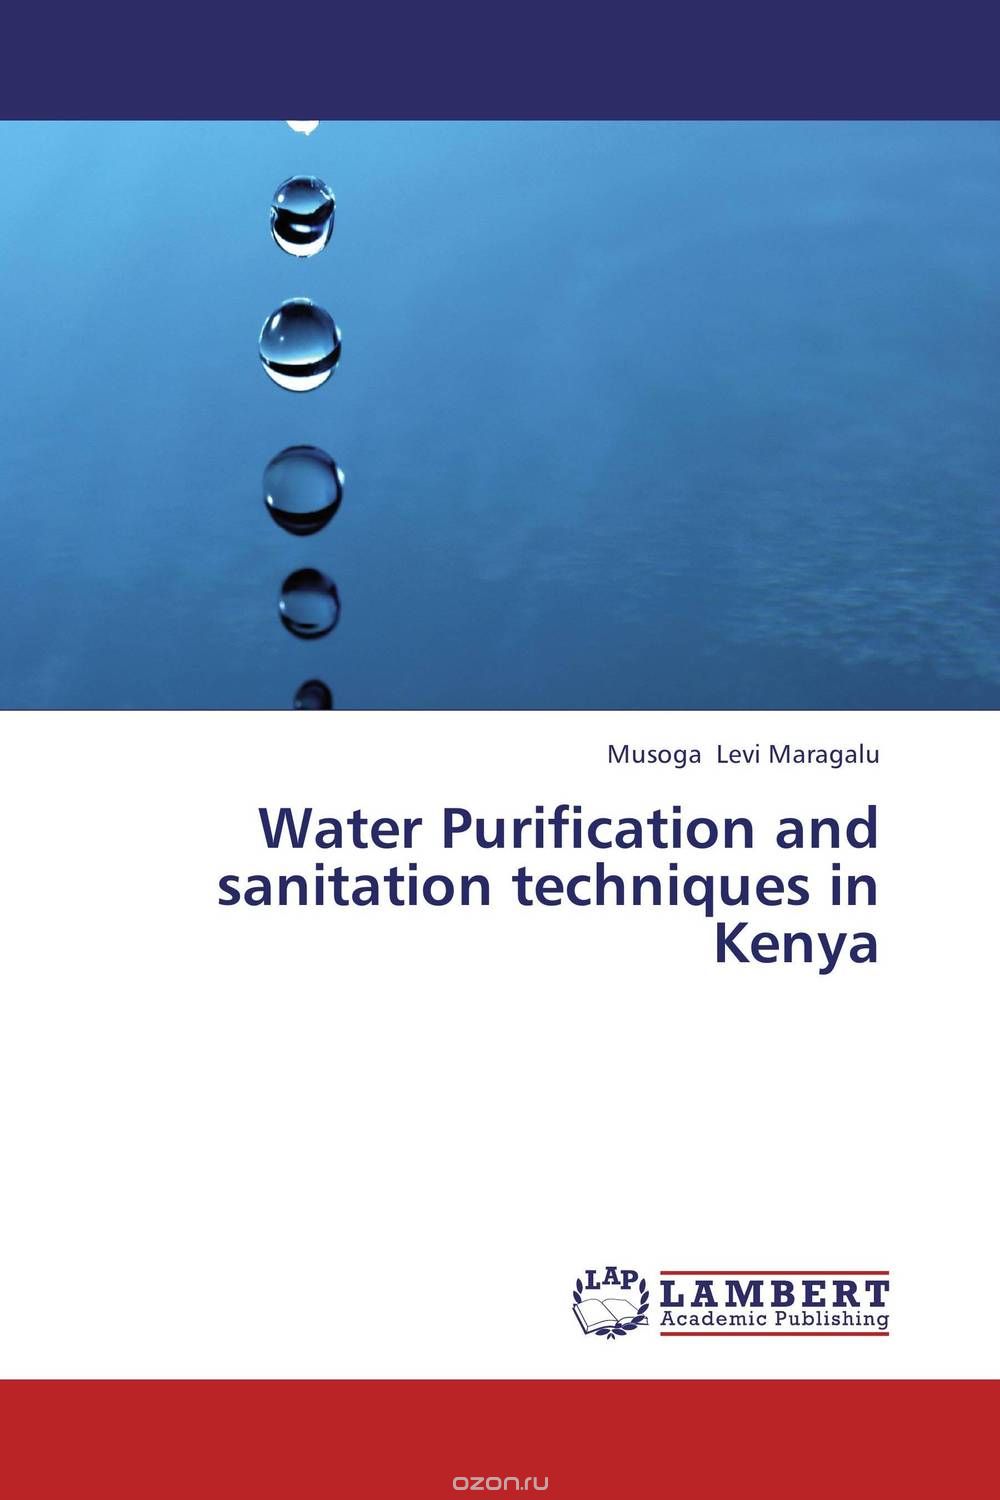 Скачать книгу "Water Purification and sanitation techniques in Kenya"